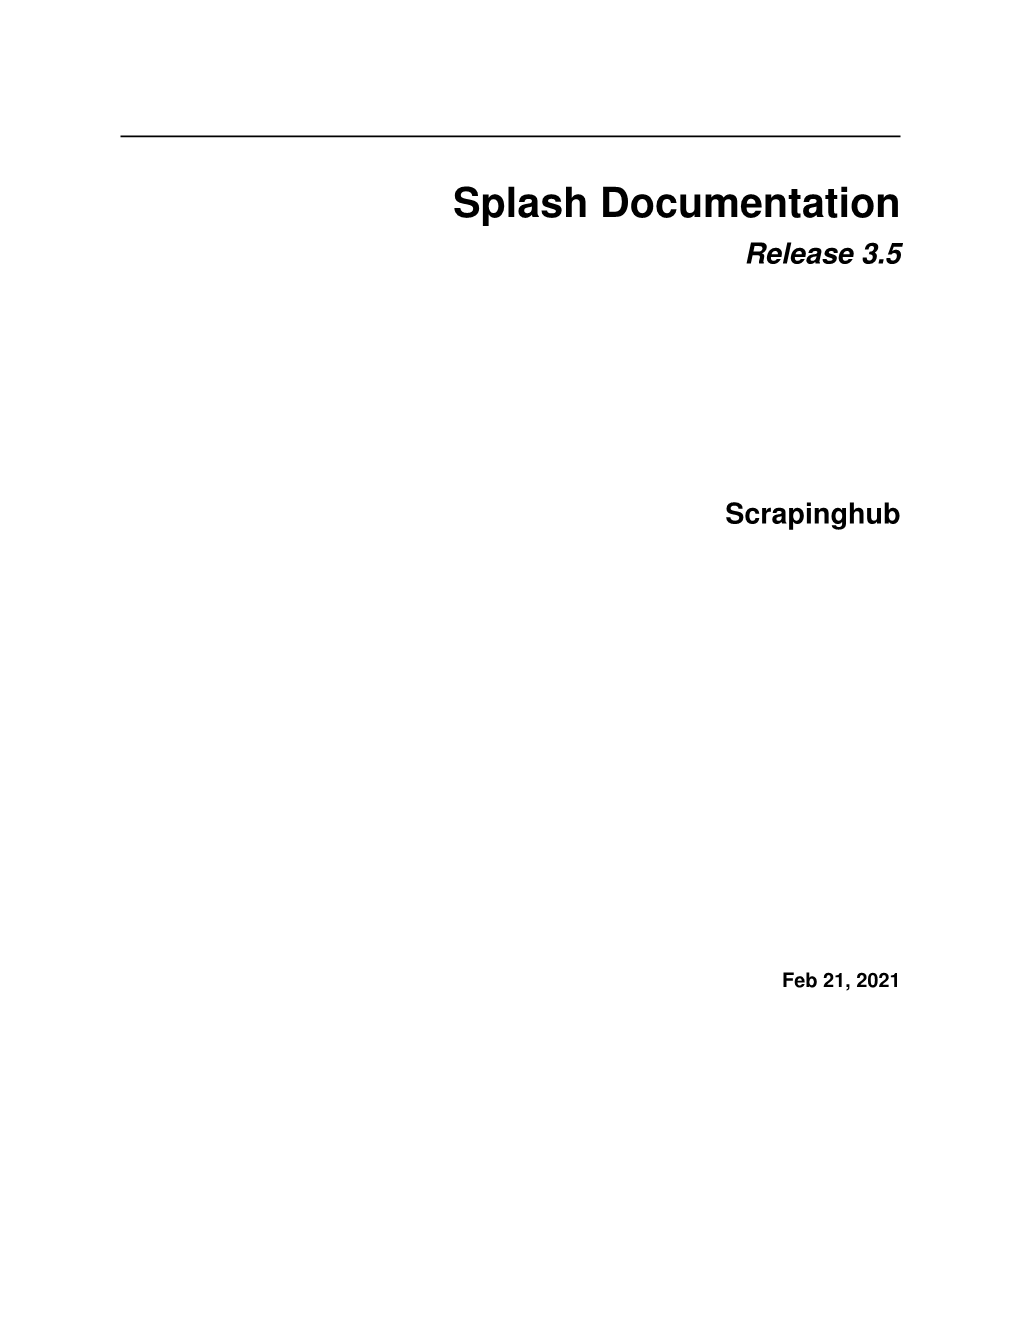 Splash Documentation Release 3.5